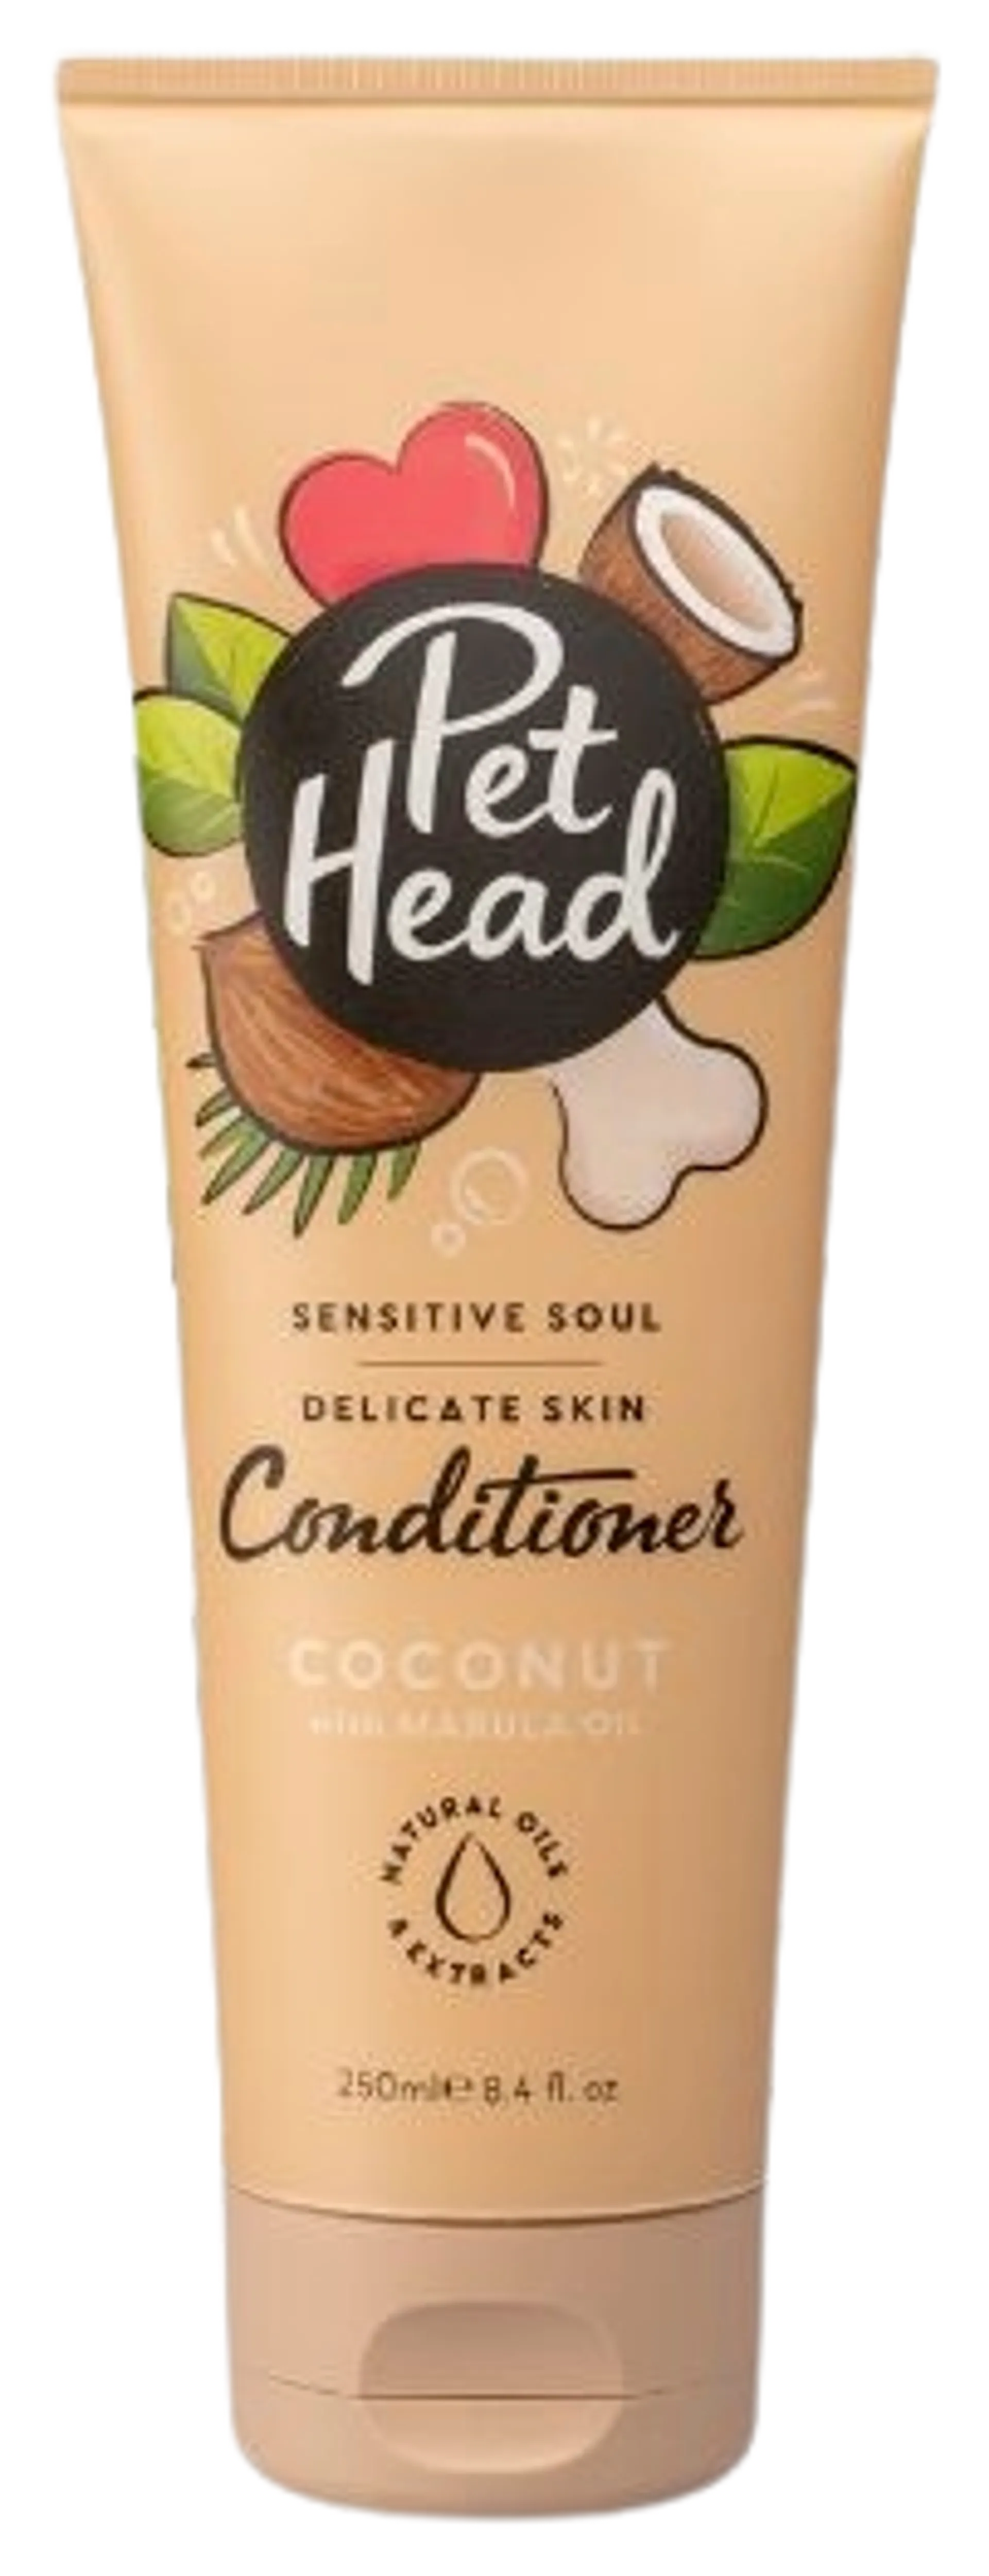 PetHead Sensitive Soul Conditioner 250ml